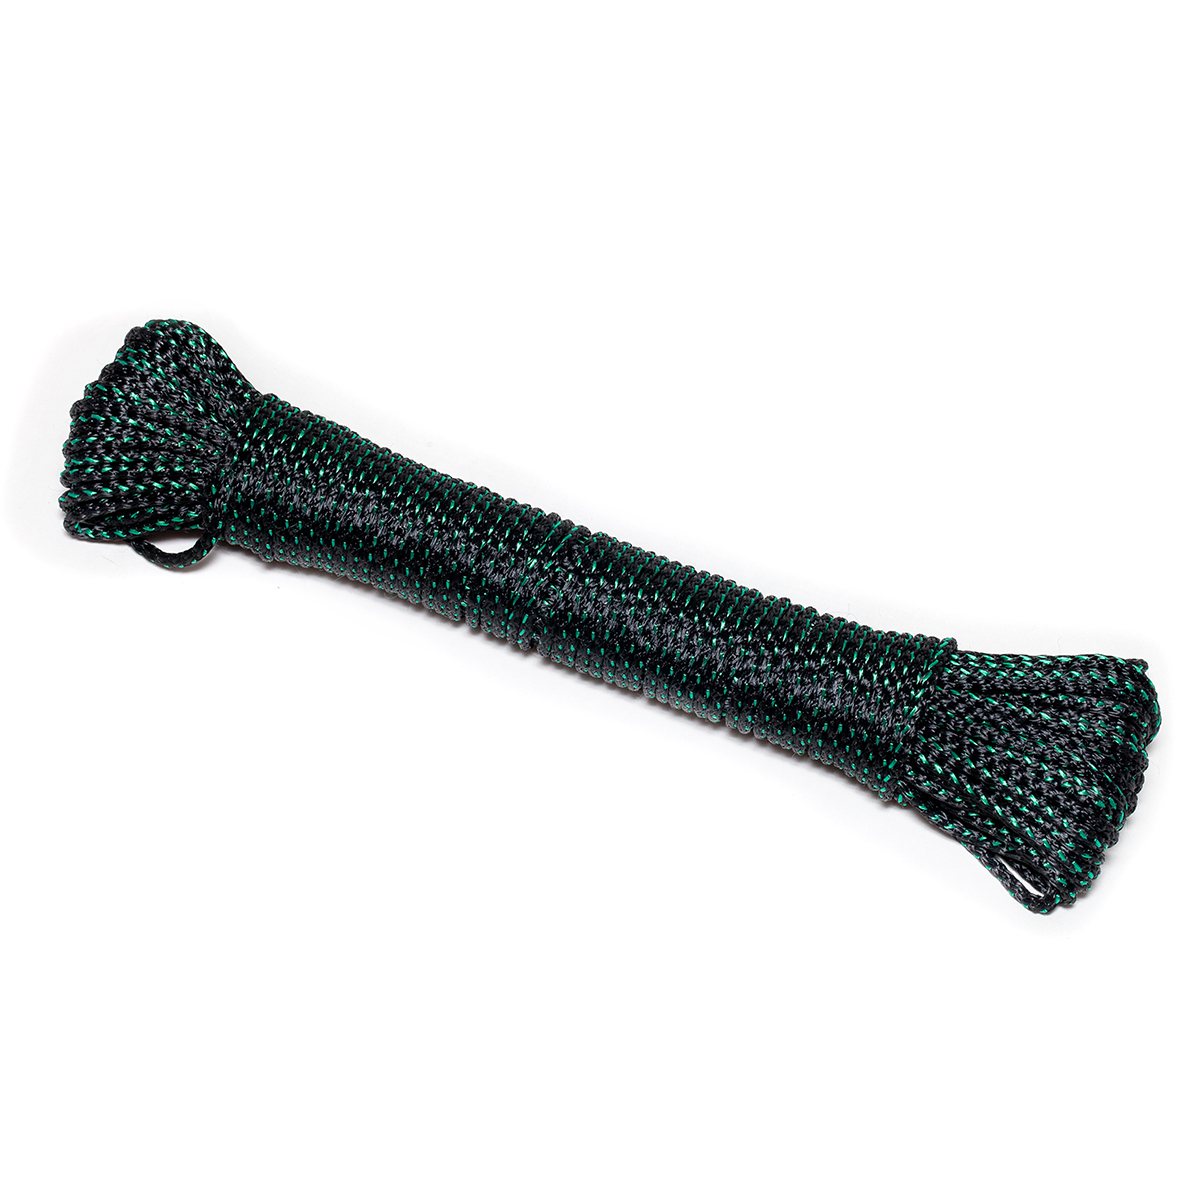 Шнур утяжеляющий Петроканат, 31 м, черно-зеленый, вес 14 г/м шнур для вязания 100% полиэфир ширина 4 мм 50м джинс